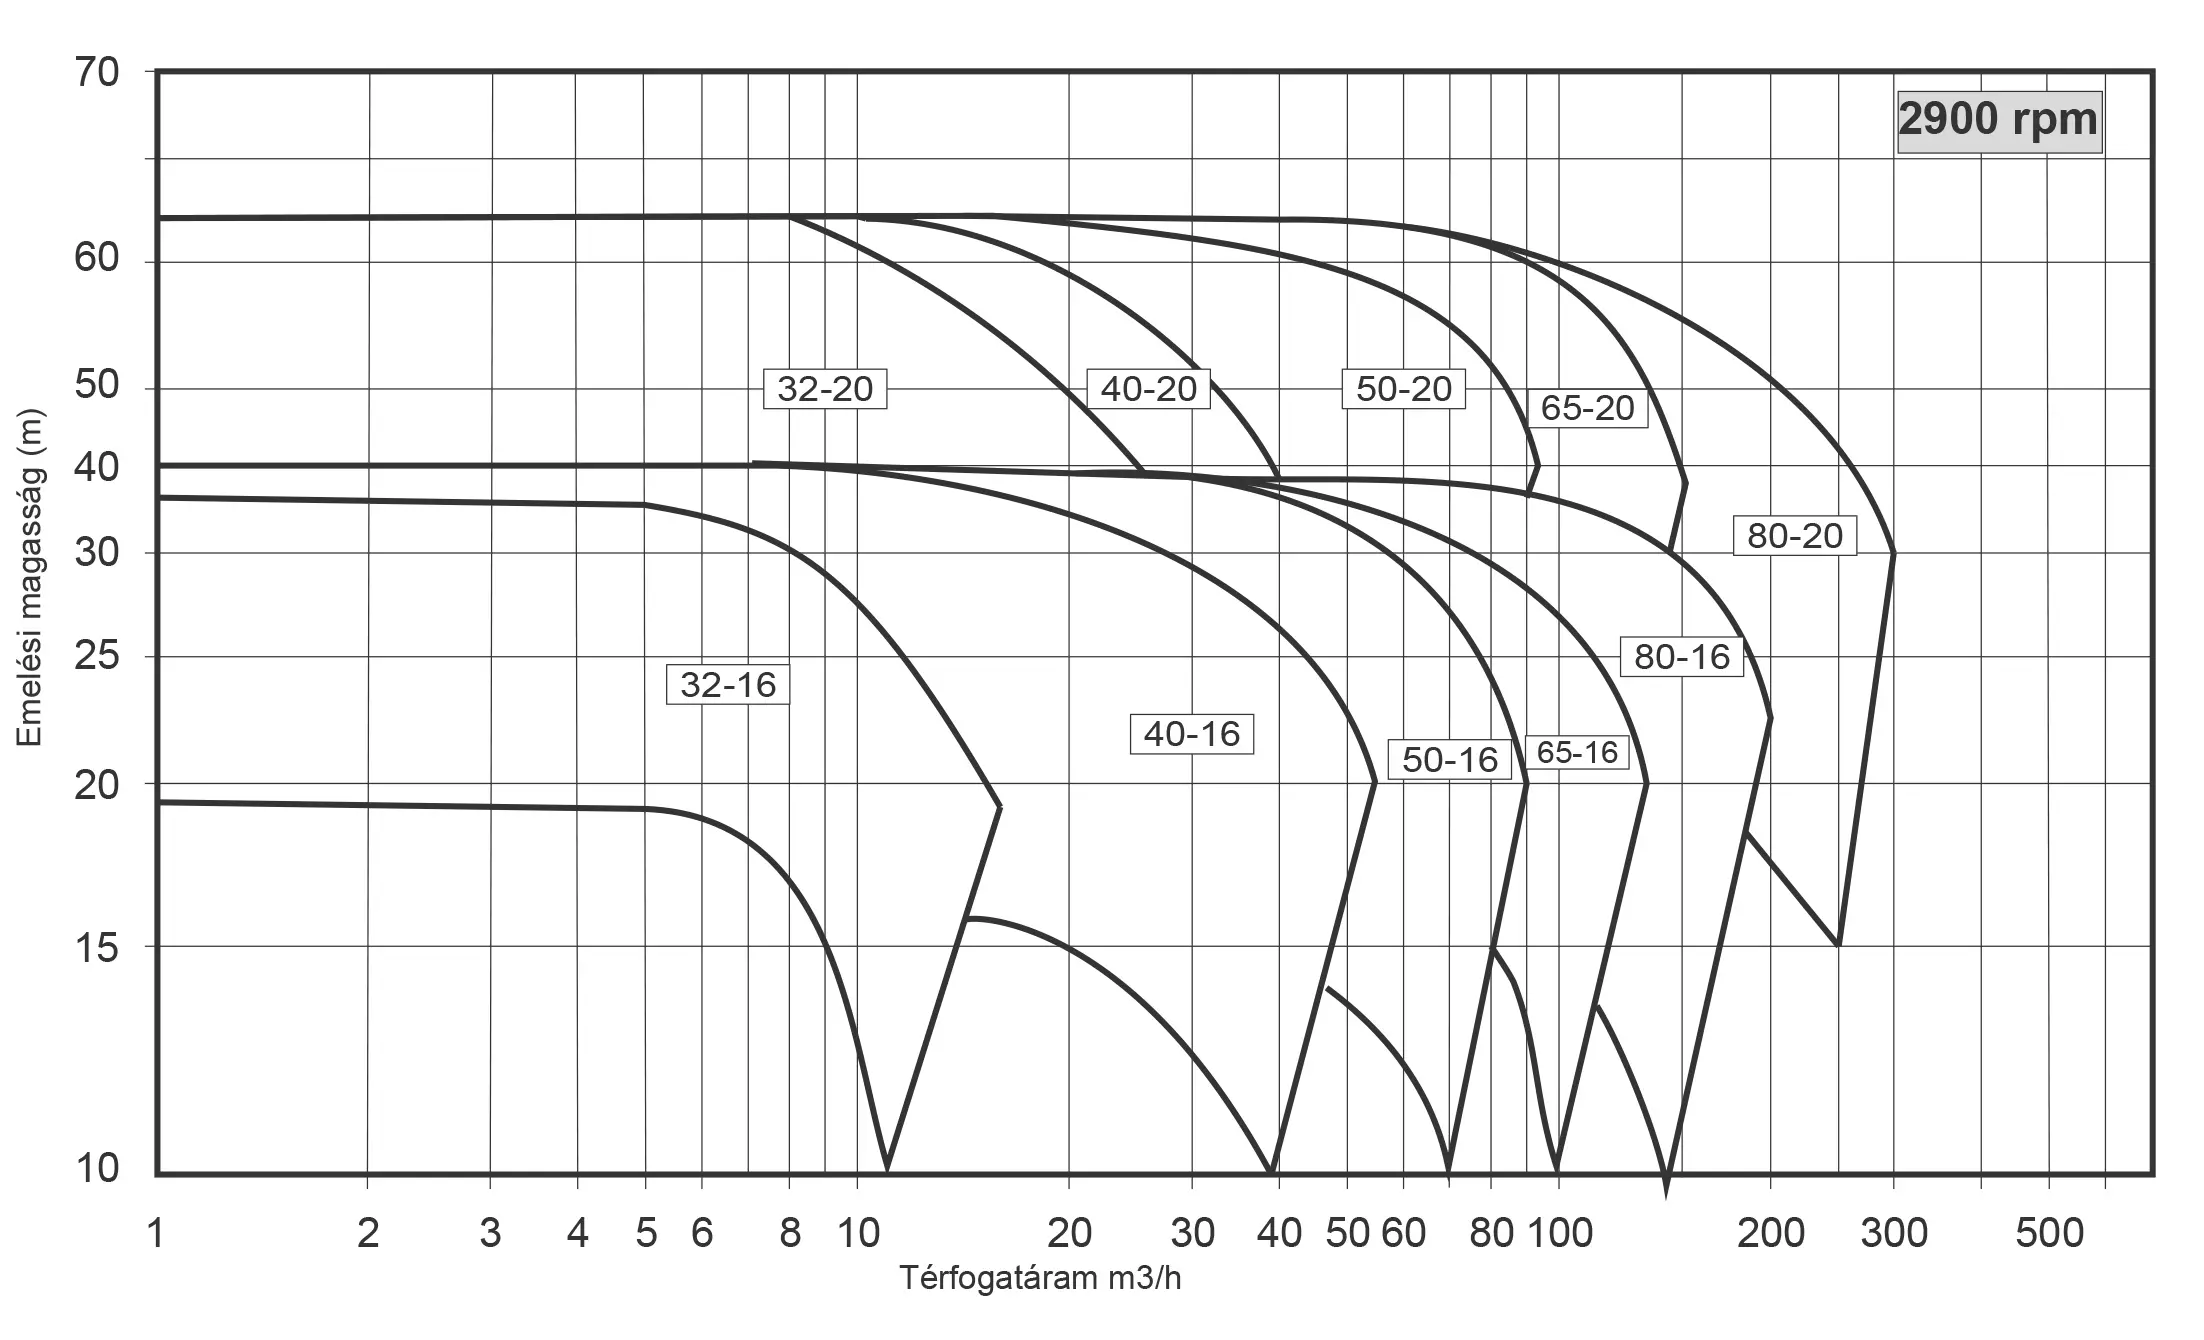 HG Performance curves